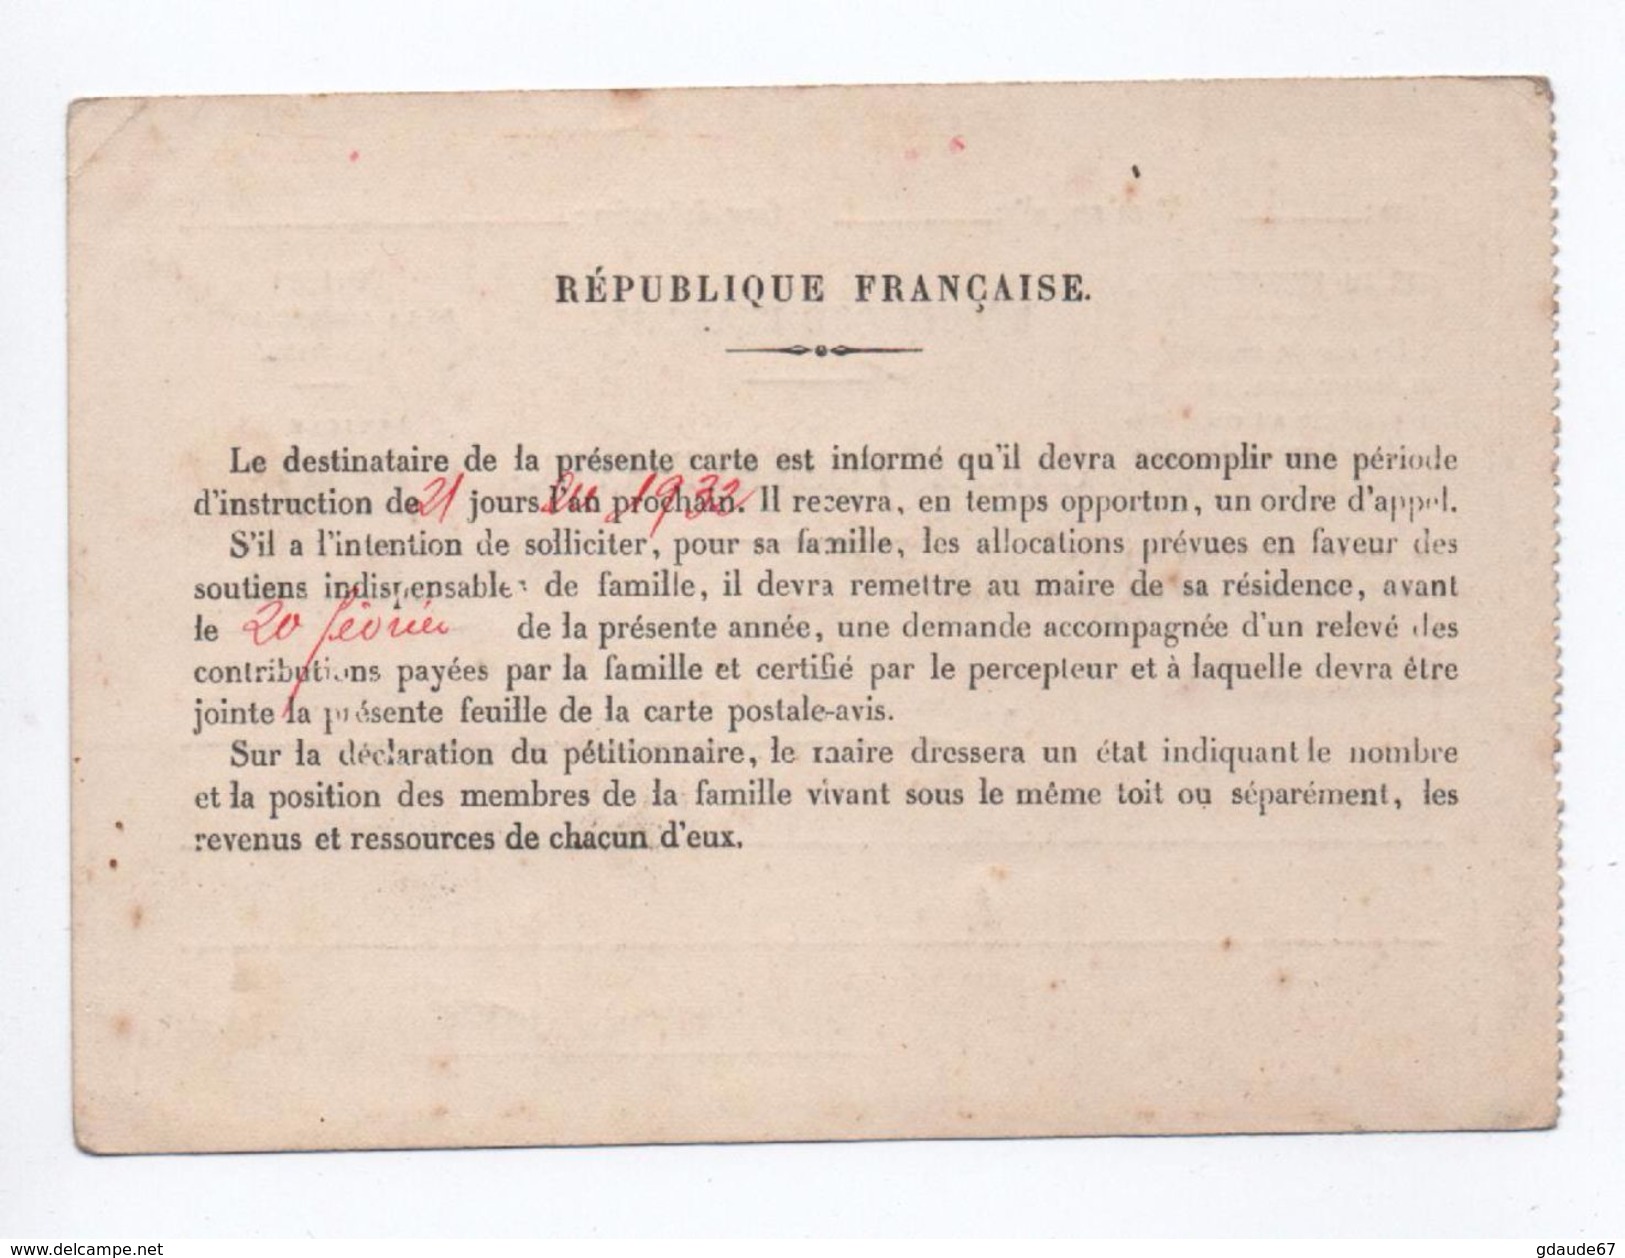 1932 - CARTE POSTALE AVIS FM Avec CACHET Du 121° REGT D'INFANTERIE DE MONTLUCON (ALLIER) - Military Postmarks From 1900 (out Of Wars Periods)